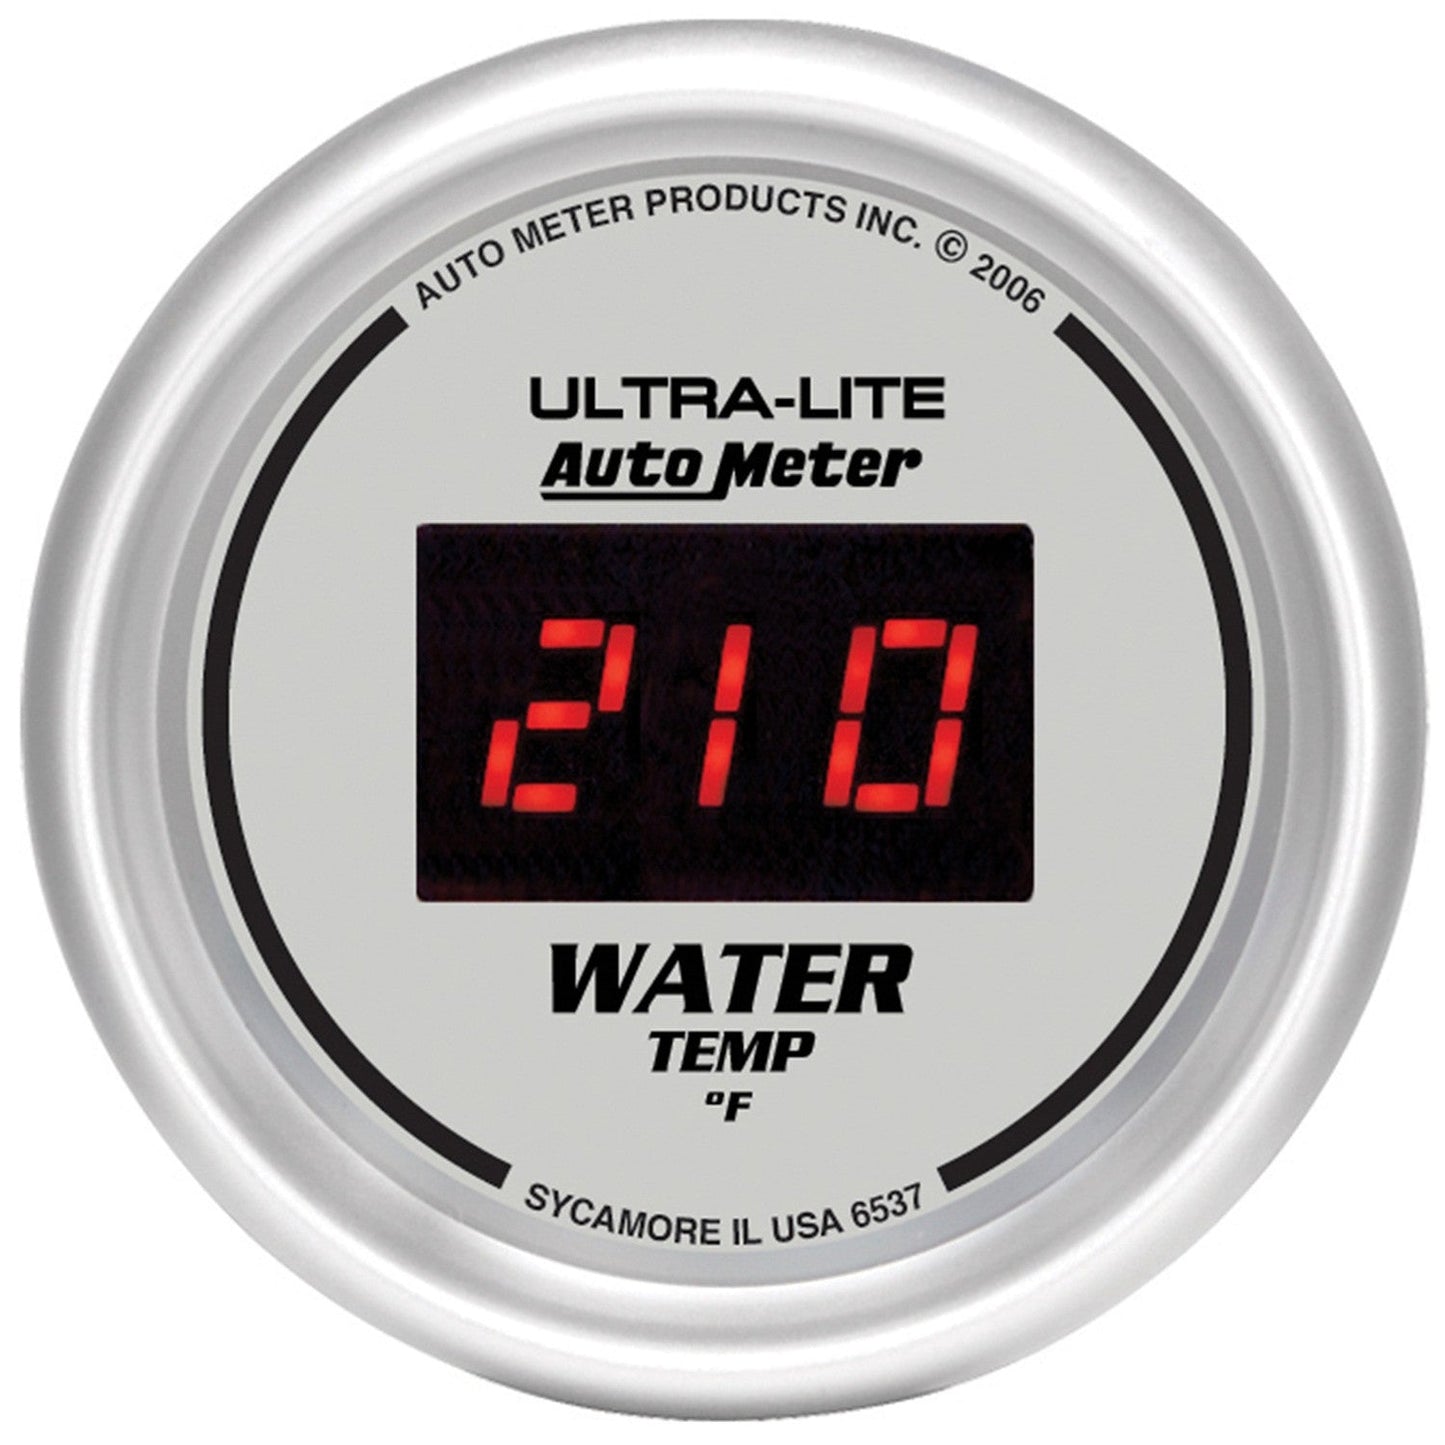 AutoMeter - 2-1/16" TEMPERATURA DEL AGUA, 0-340 °F, ULTRA-LITE DIGITAL (6537)